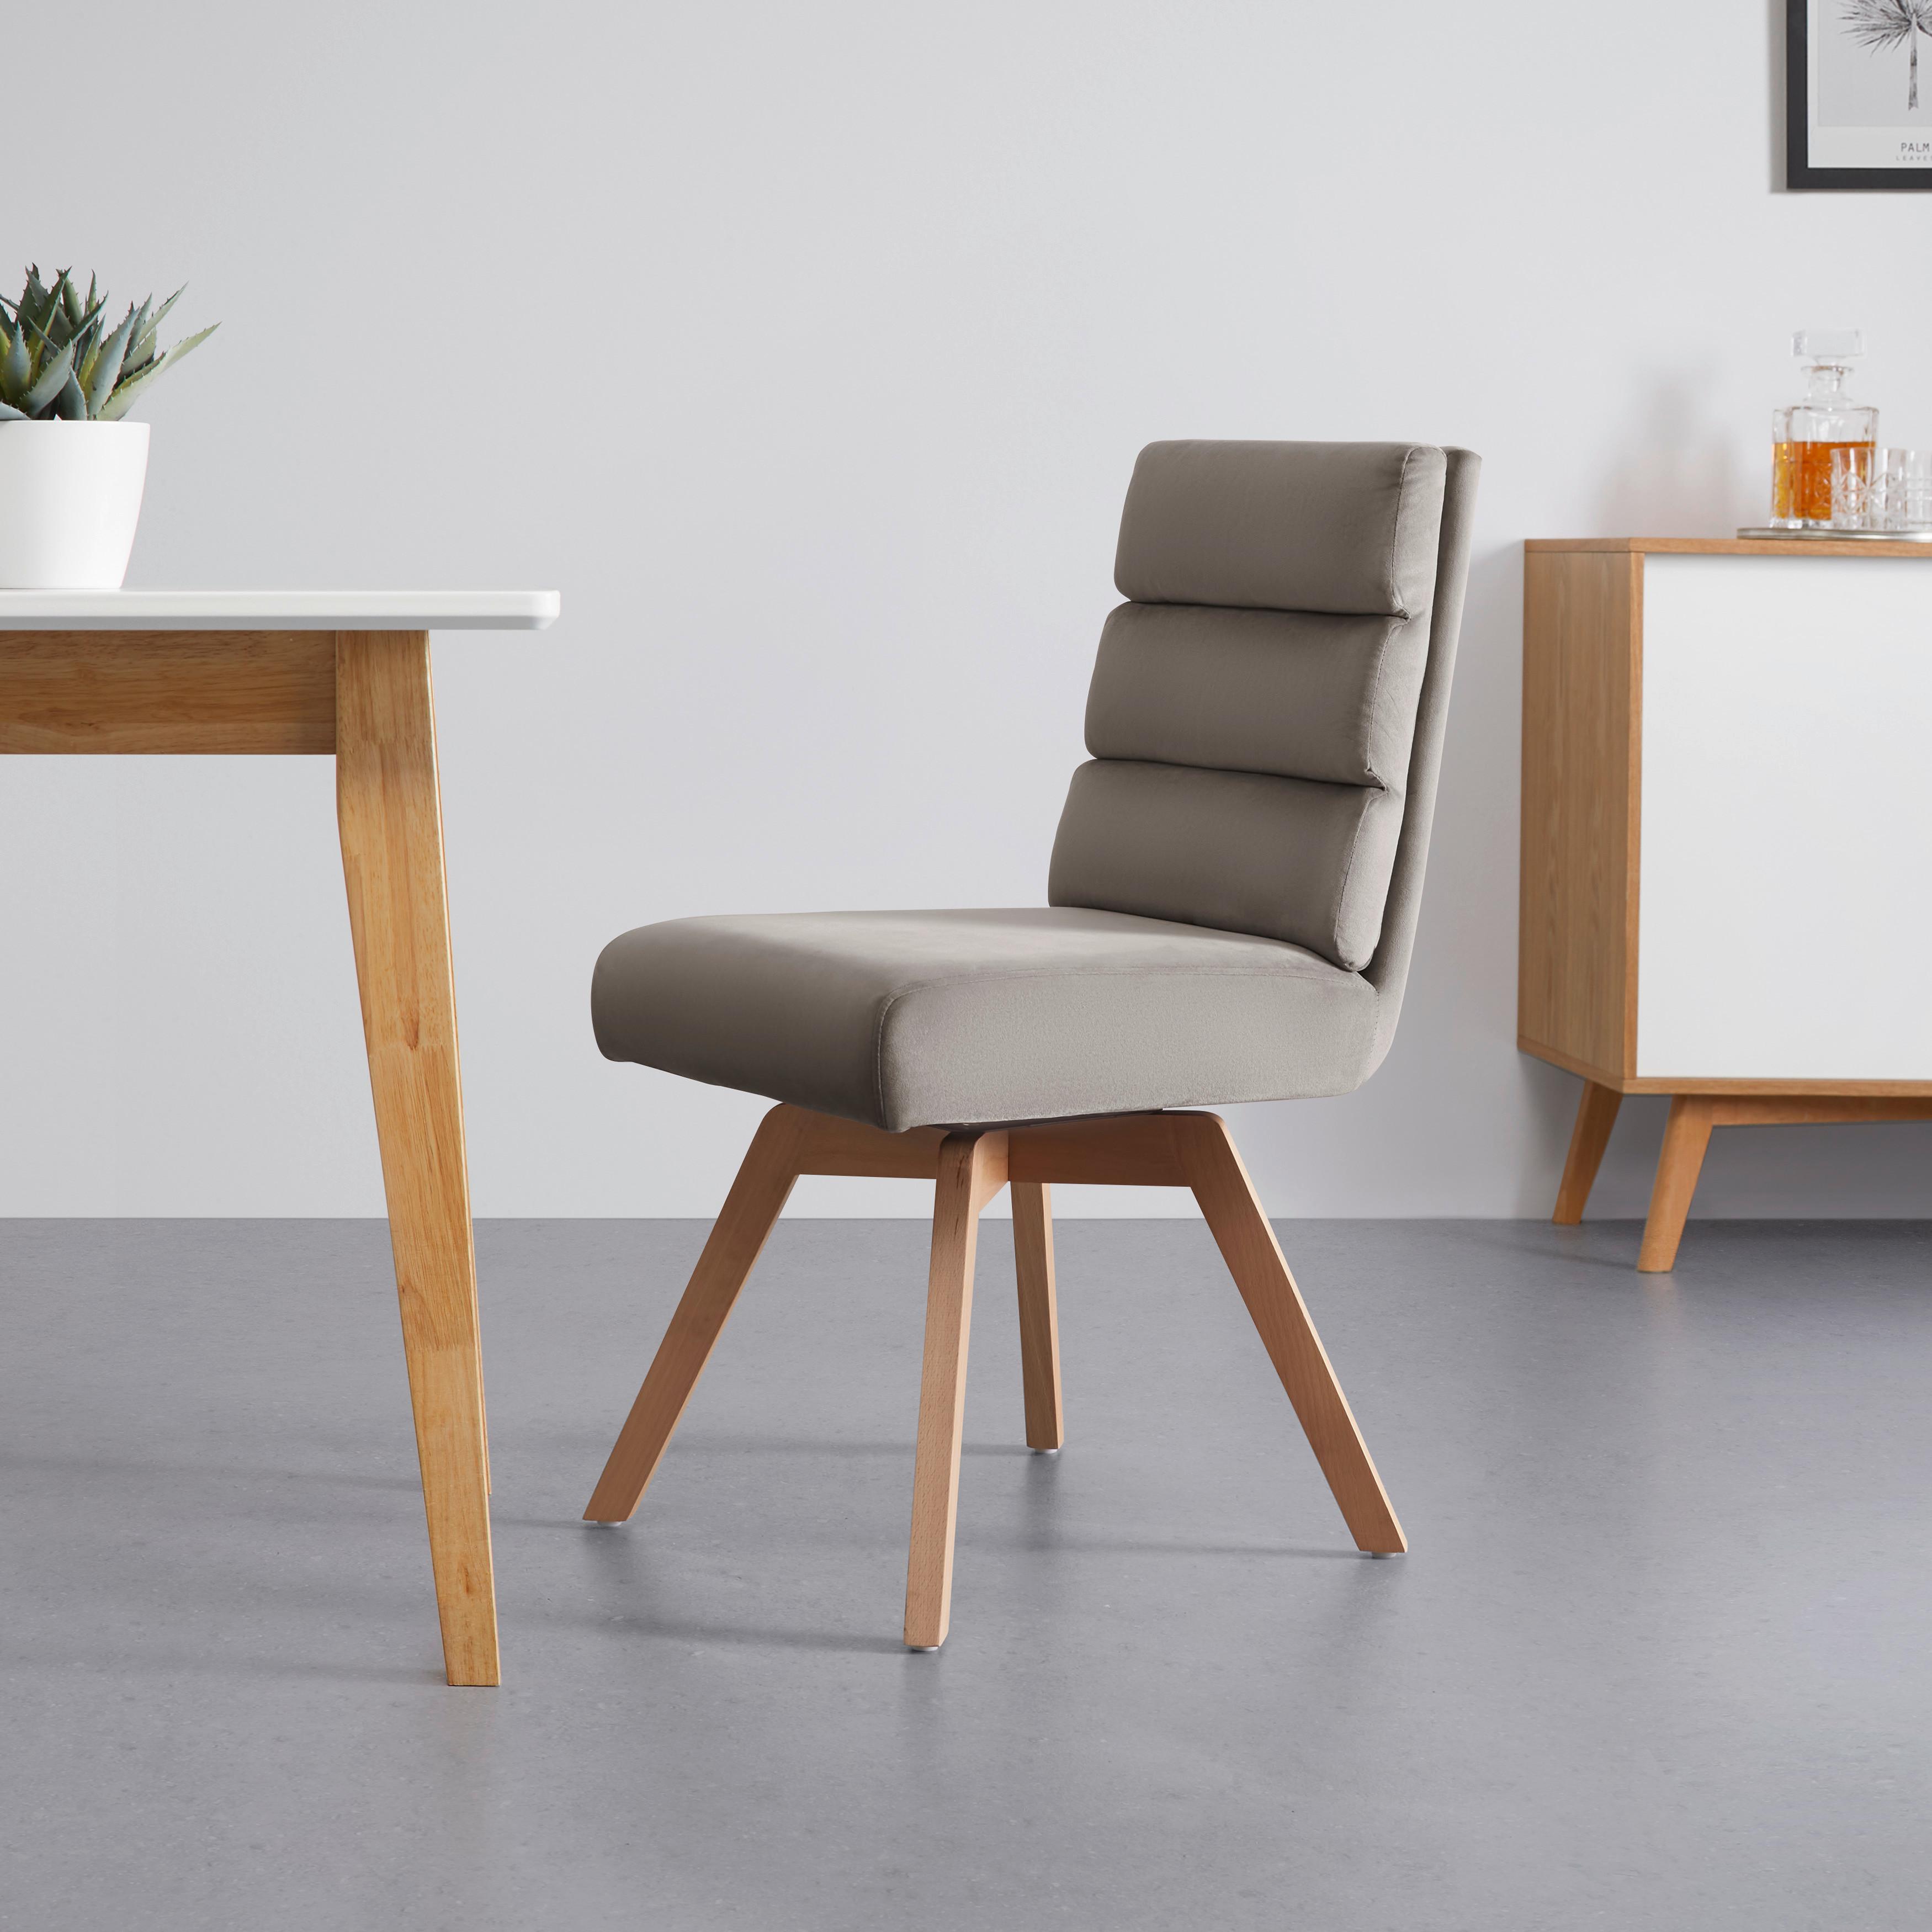 Stuhl "Katrin", drehbar, taupe - Taupe/Naturfarben, MODERN, Holz/Textil (45/62/88cm) - Bessagi Home